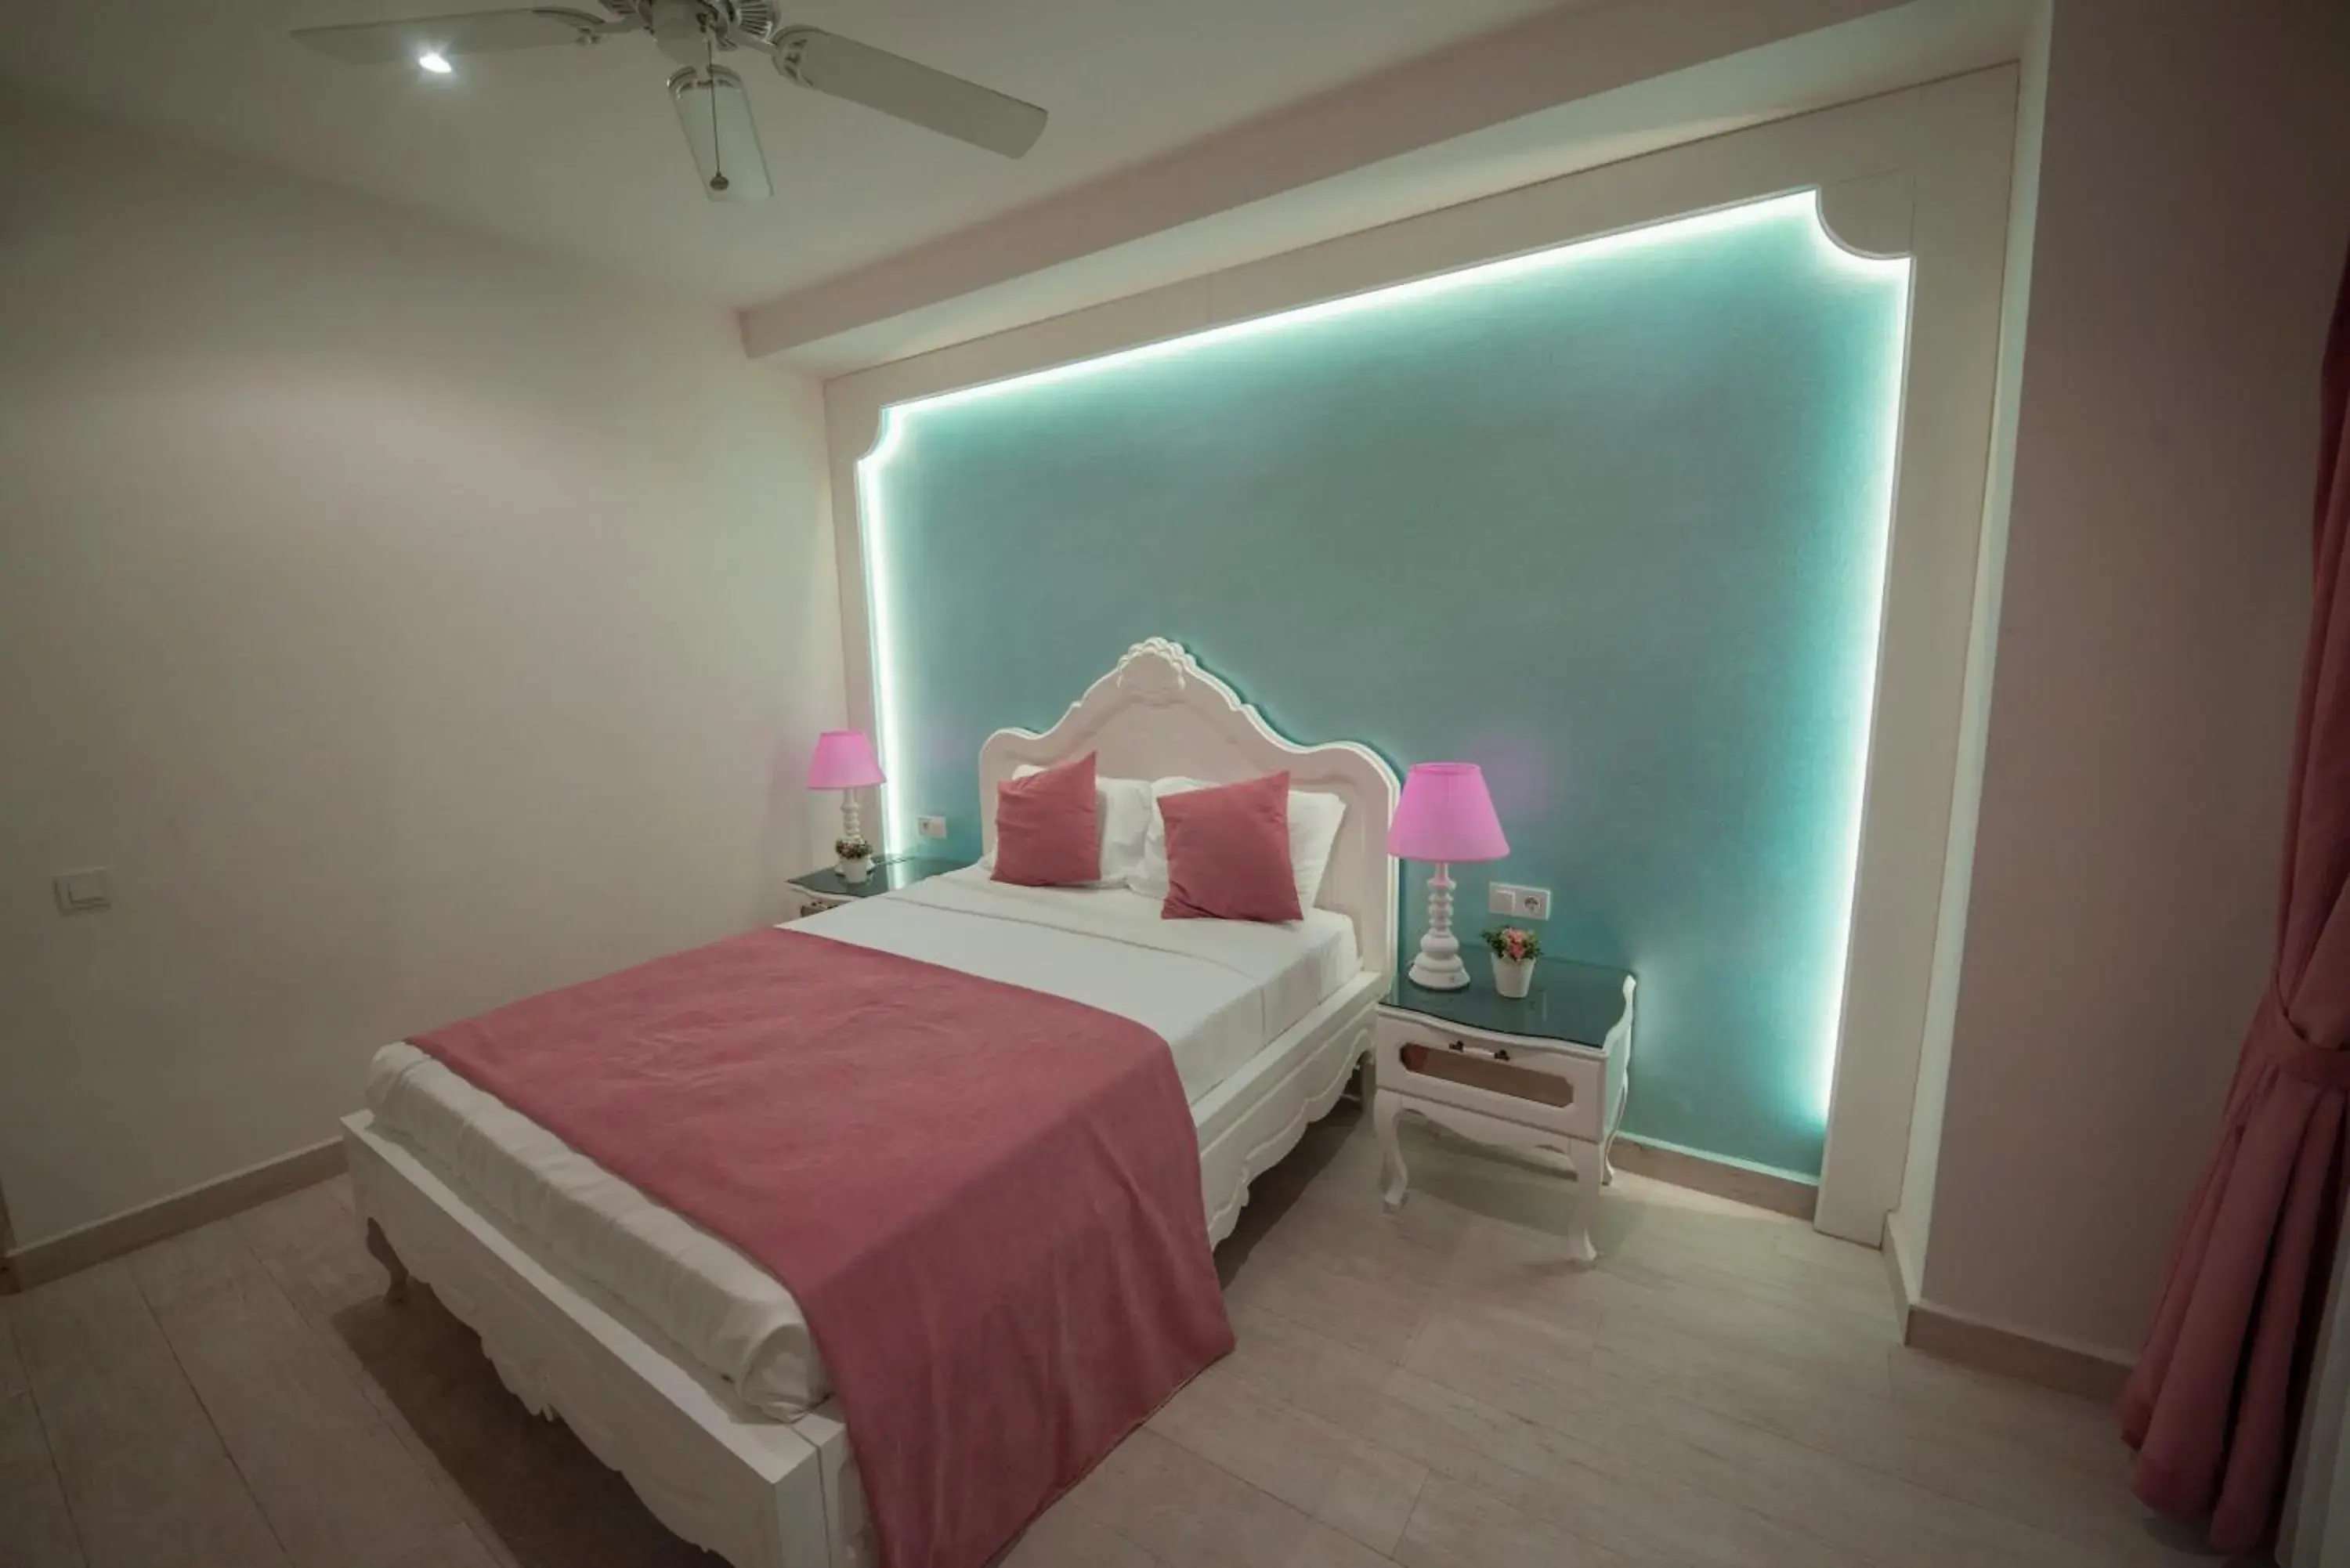 Bed, Room Photo in Montebello Deluxe Hotel